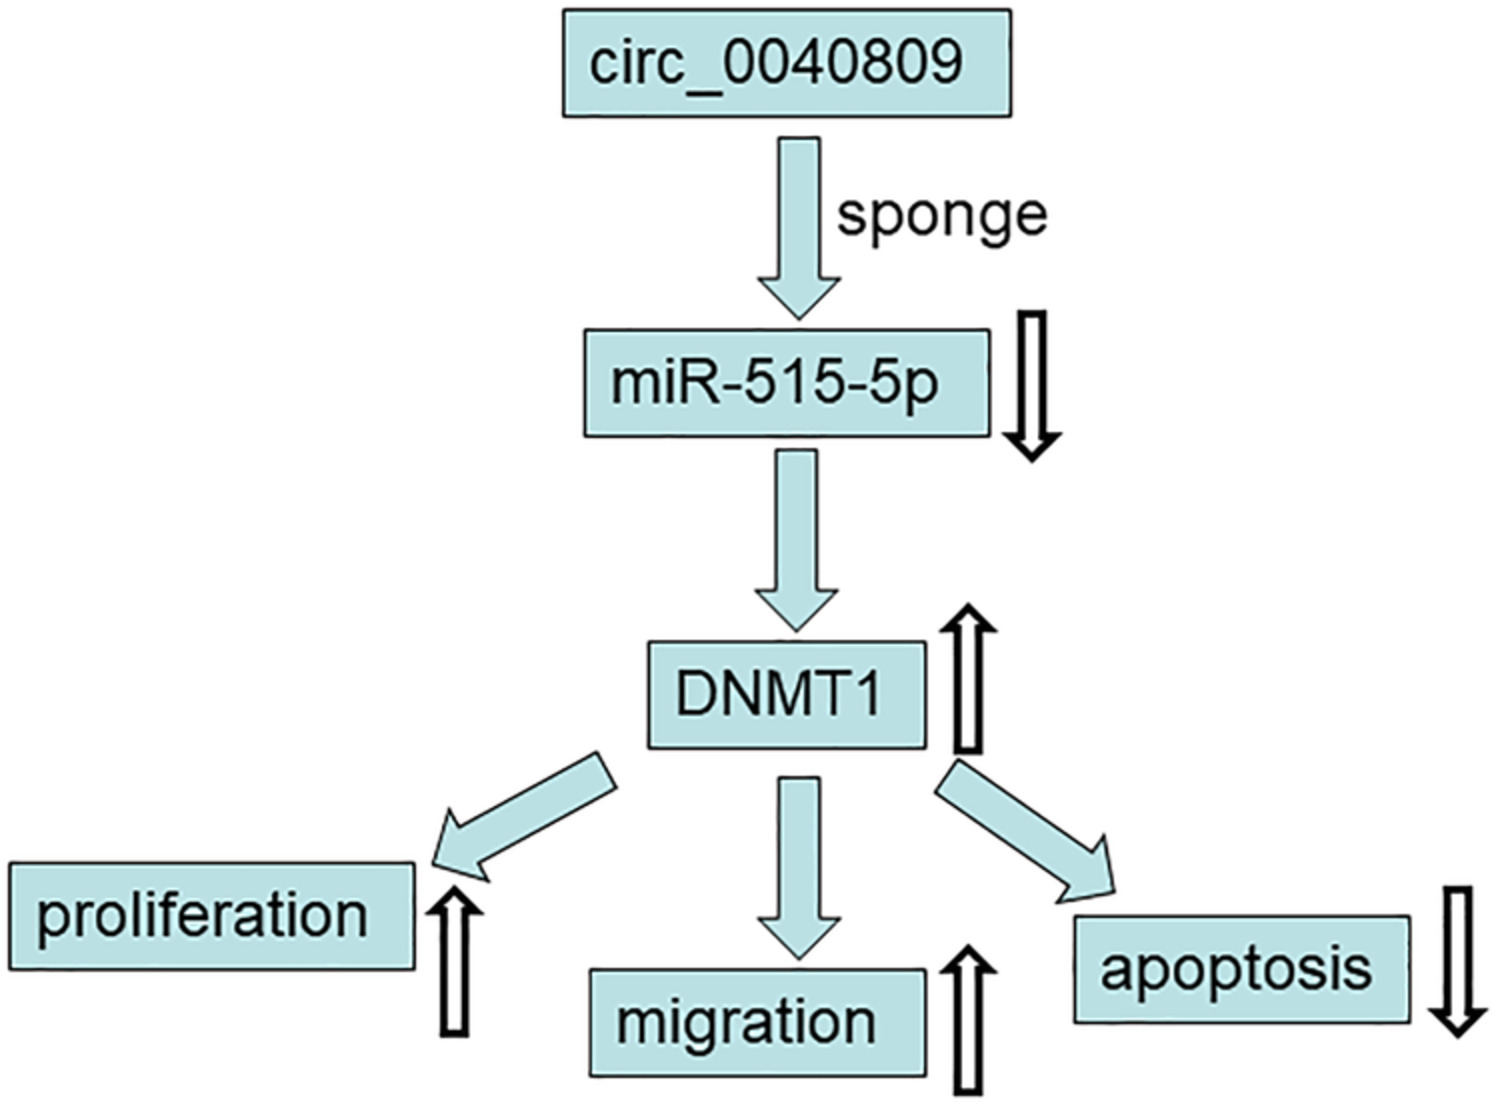 Hsa_circ_0040809 regulates colorectal cancer development by upregulating methyltransferase DNMT1 via targeting miR‐515‐5p